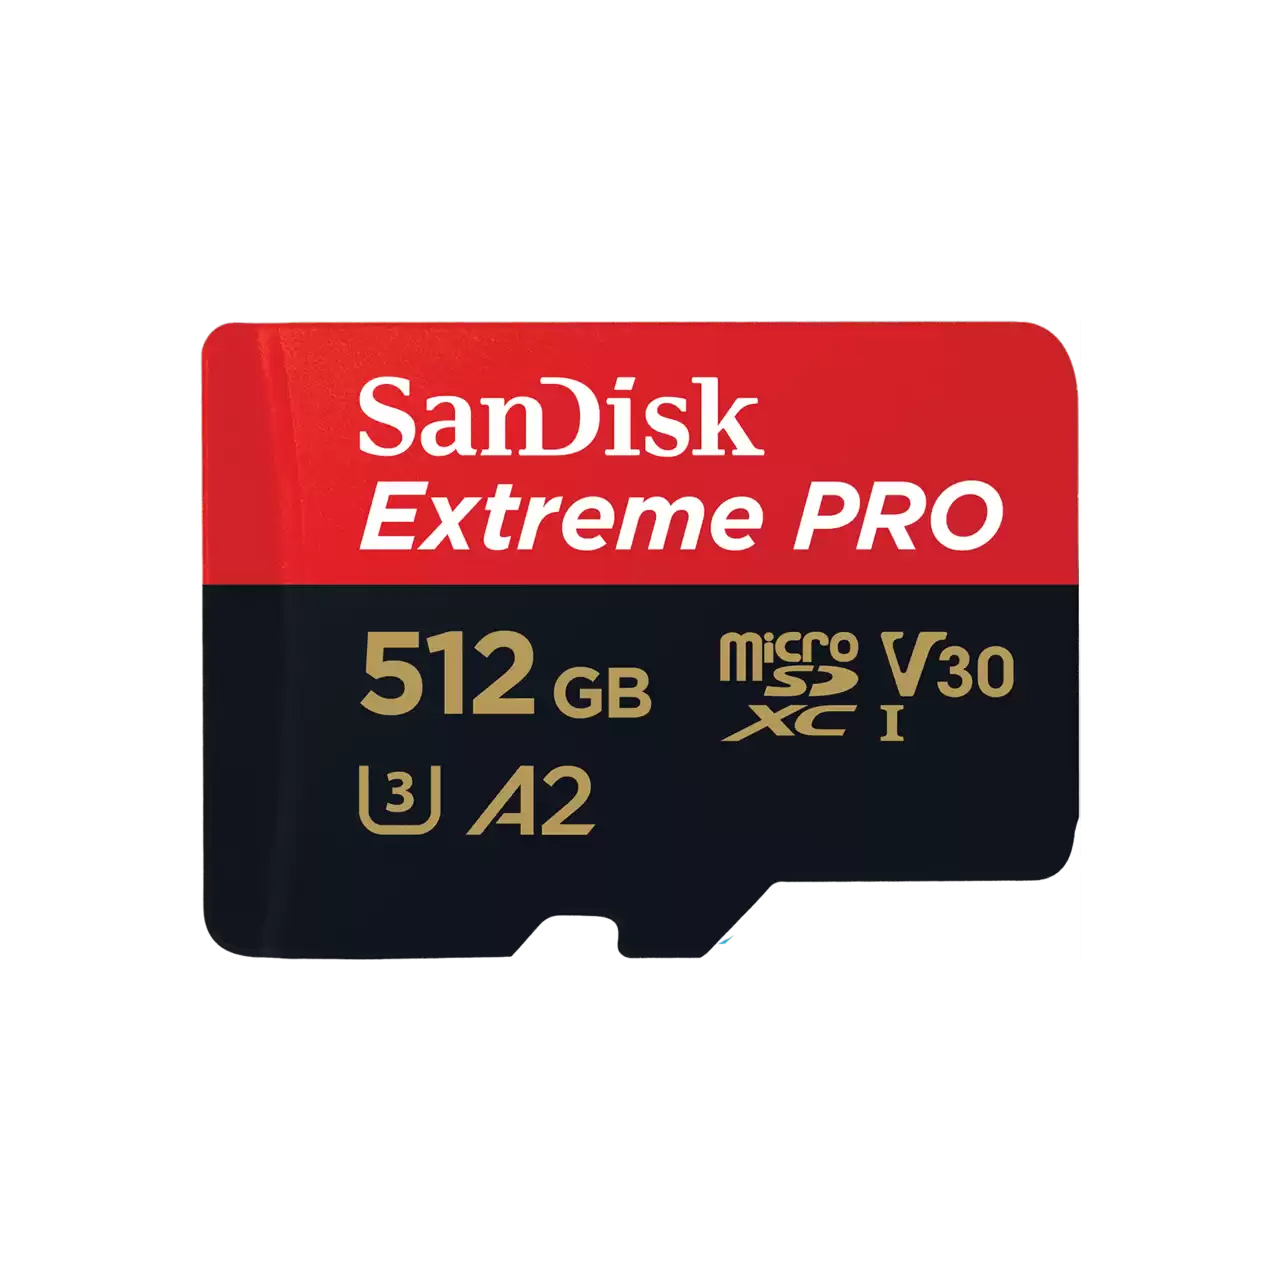 SanDisk Extreme PRO microSDXC™ UHS-I CARD with Adapter